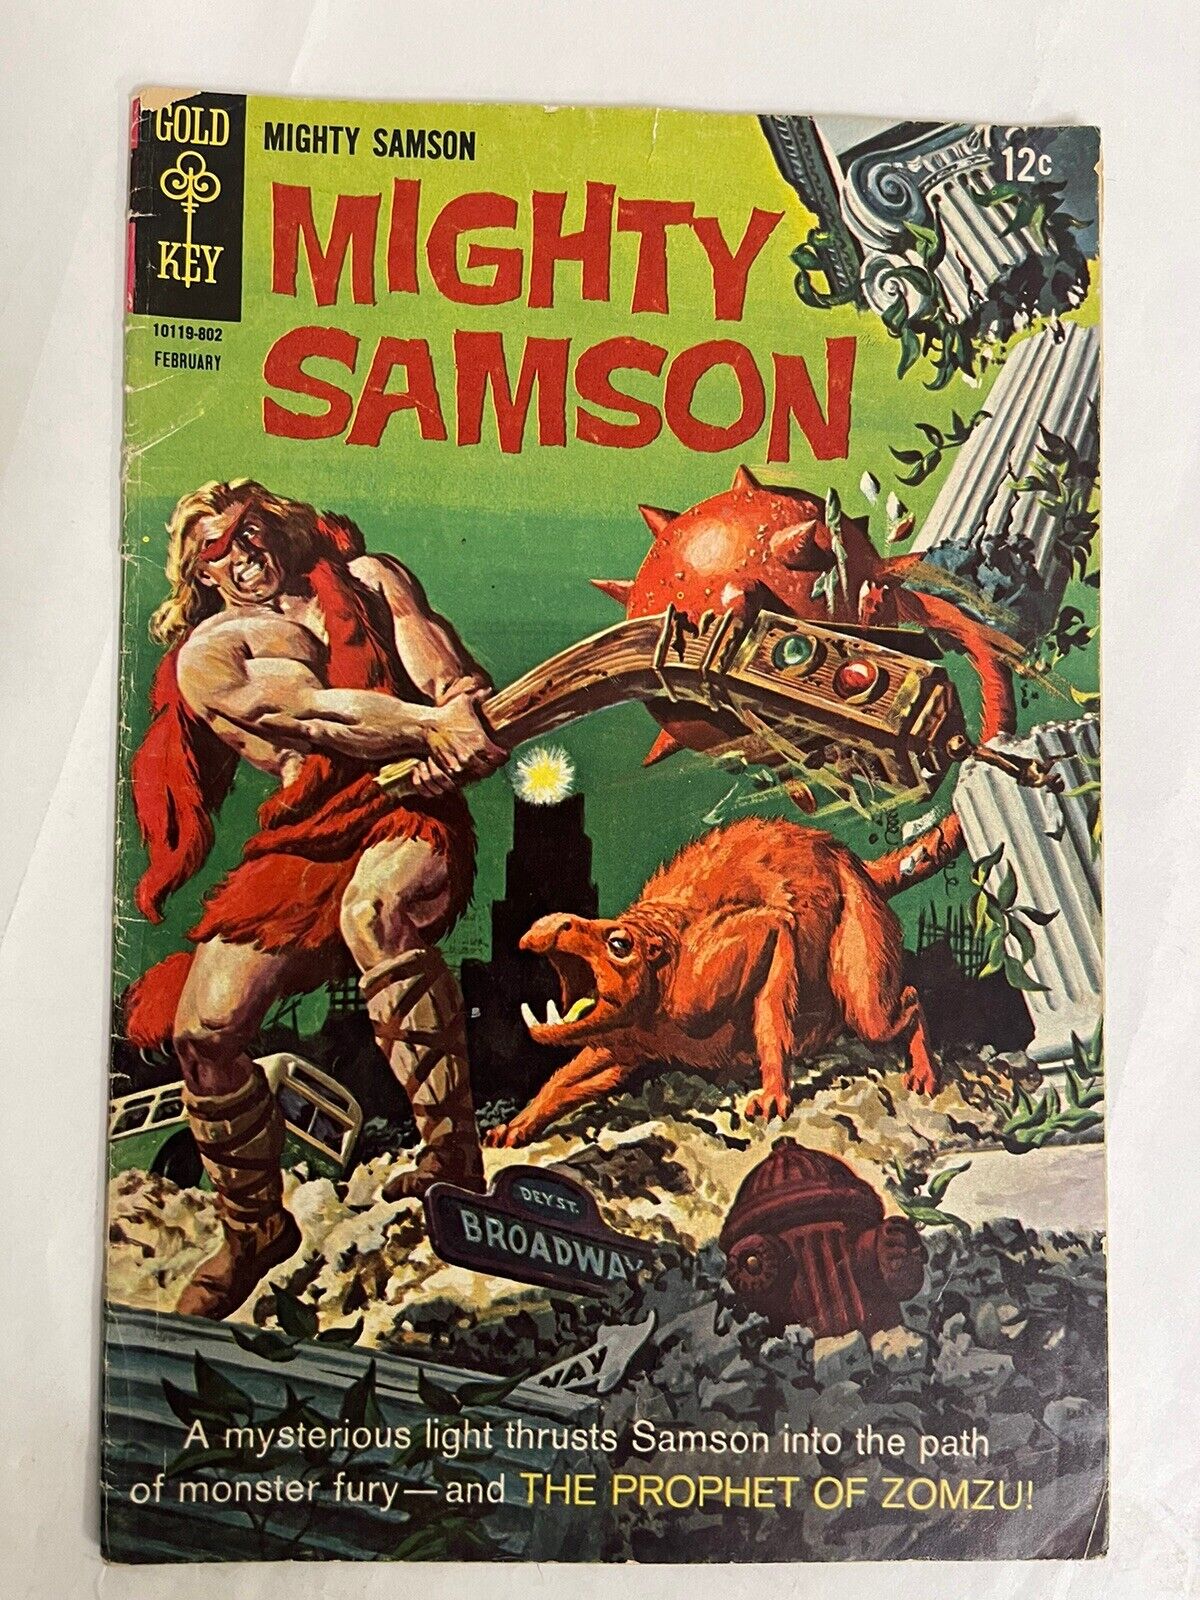 Mighty Samson #13 (1968) Gold Key